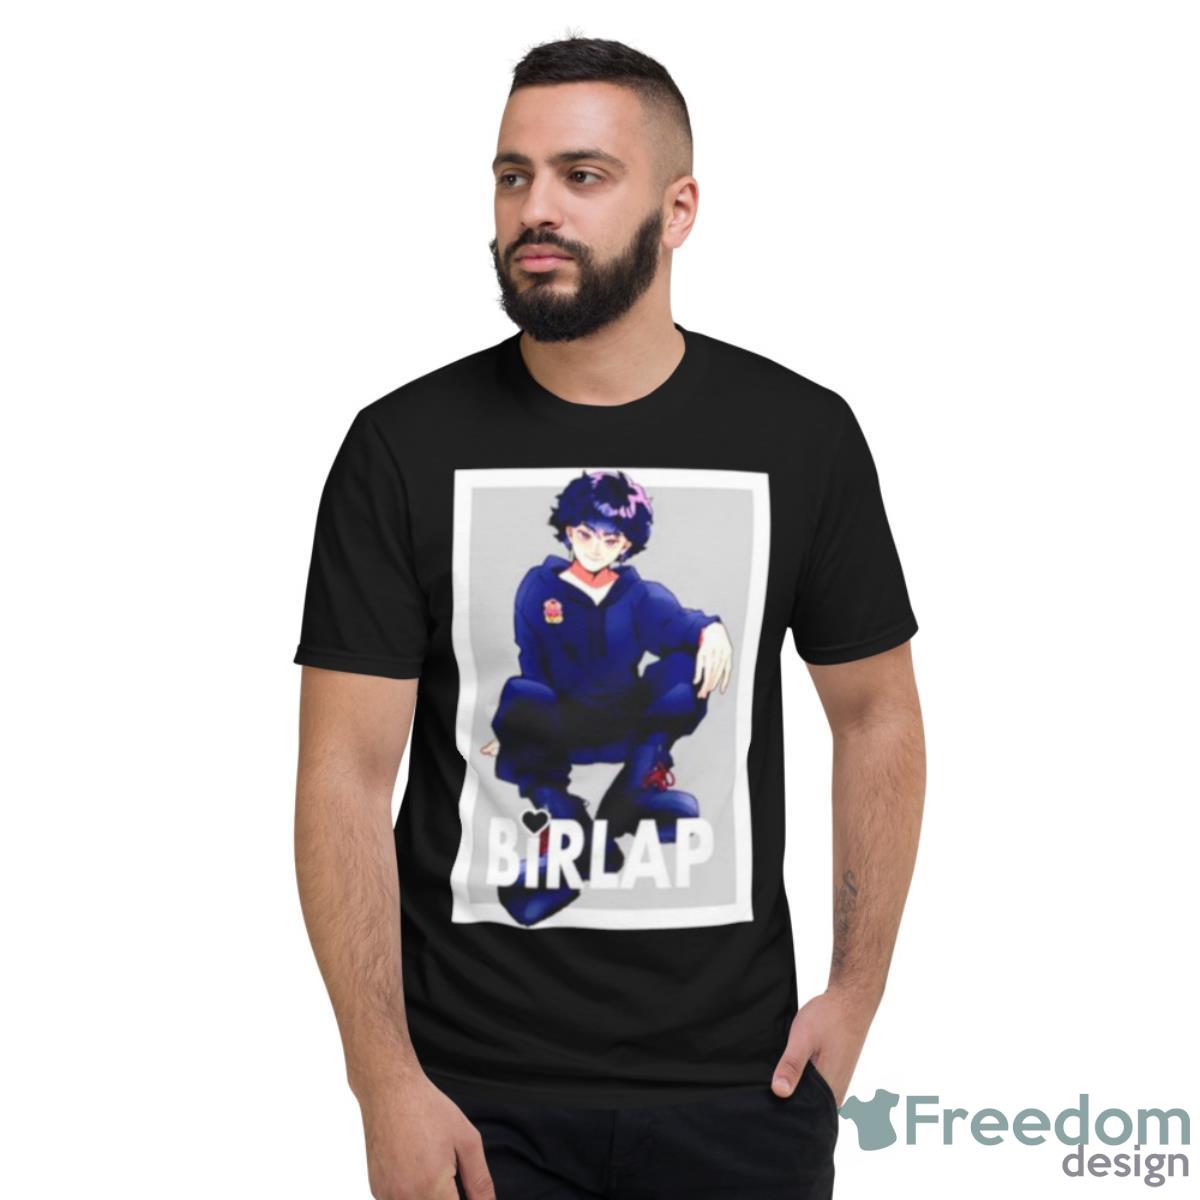 The King’s Choice Birlap Shirt